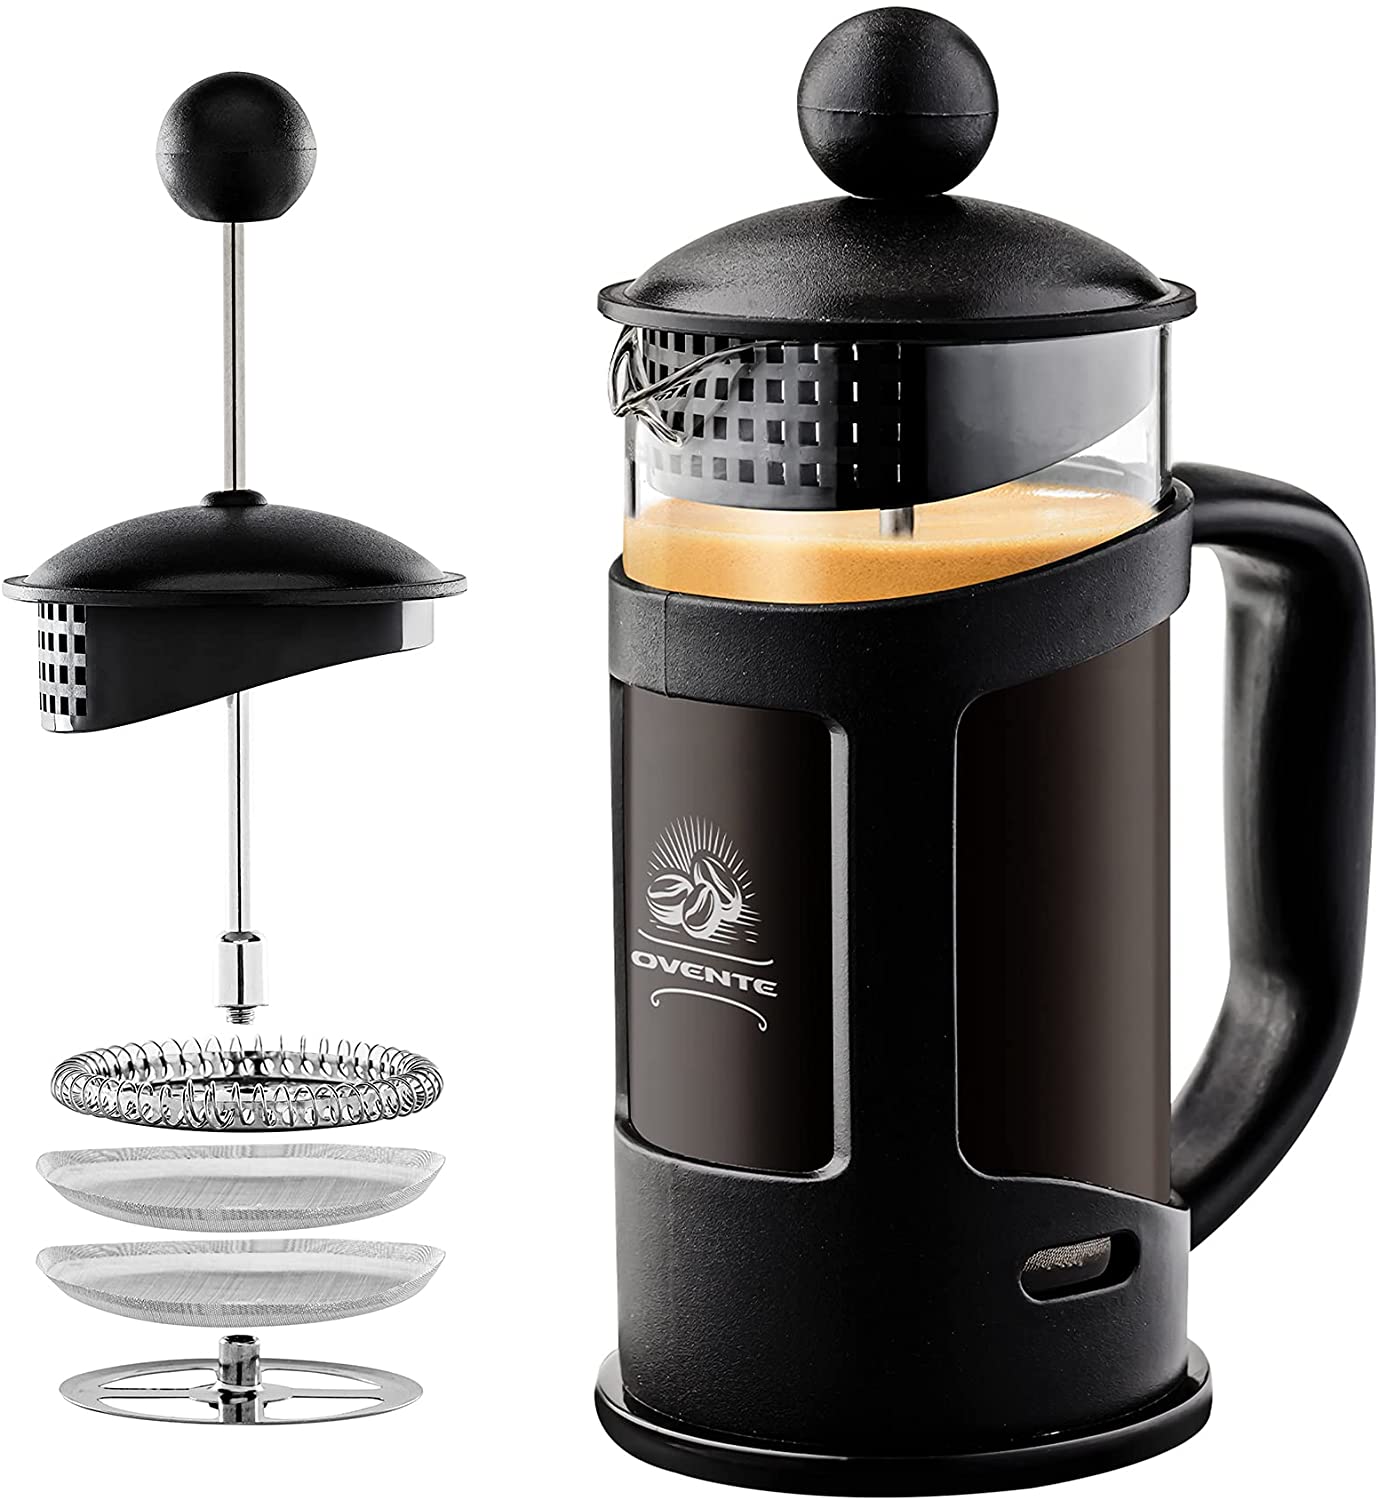 12-Oz Ovente French Press Coffee & Tea Maker $6.60 + Free Store Pickup